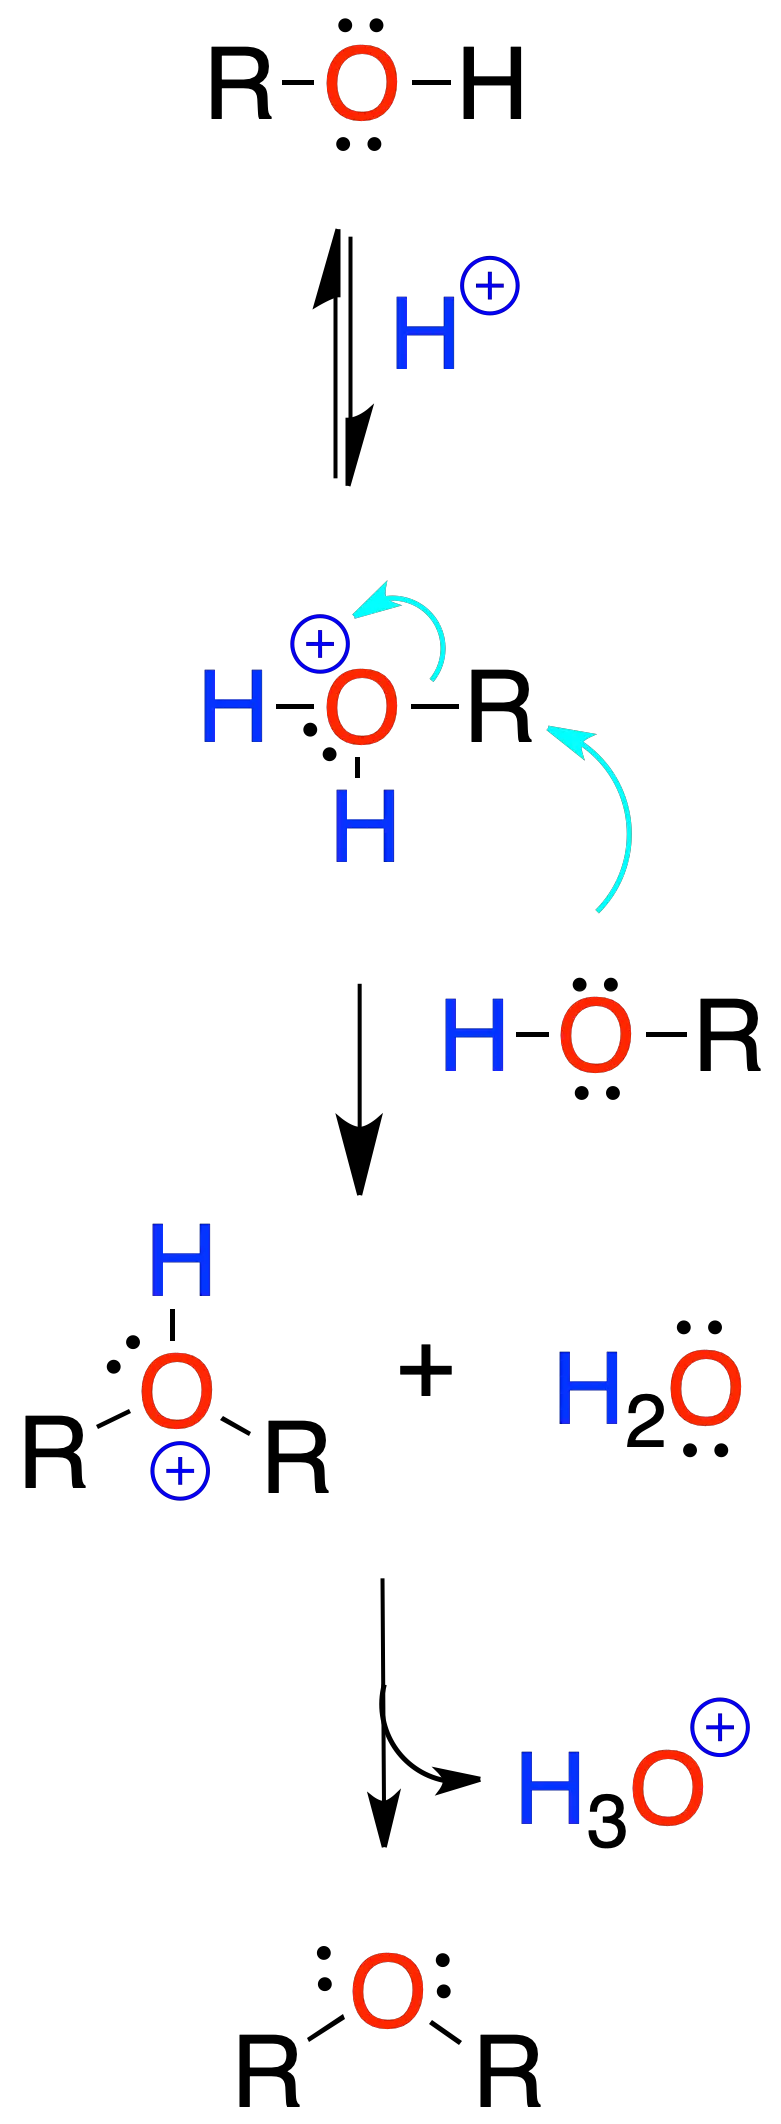 reacciones de alcoholes eteres oxiranos epoxidos conversion de alcoholes en eteres en medio acido